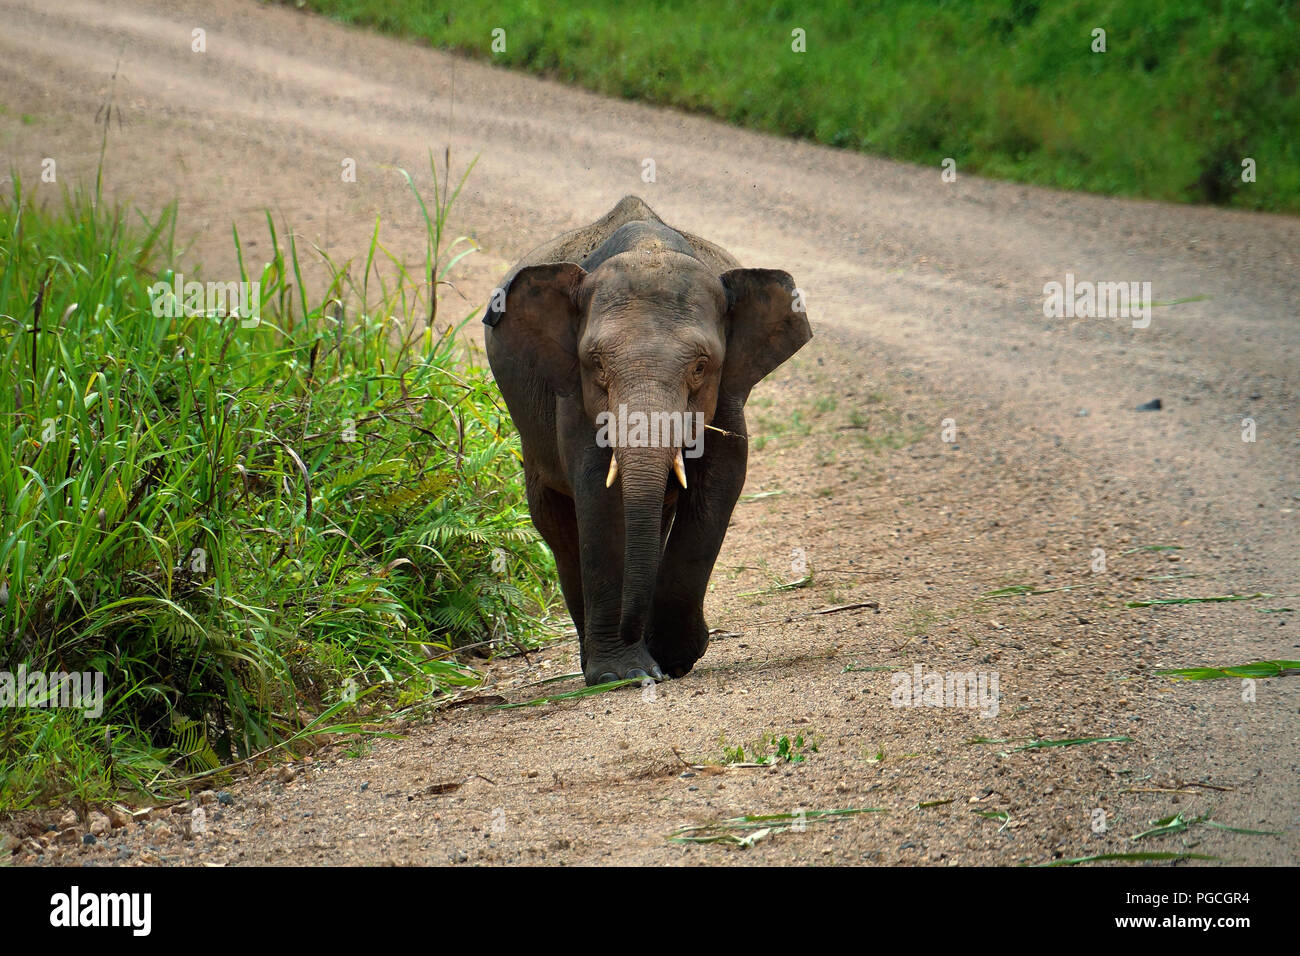 Borneo pygmy elephant Elephas maximus borneensis Stock Photo